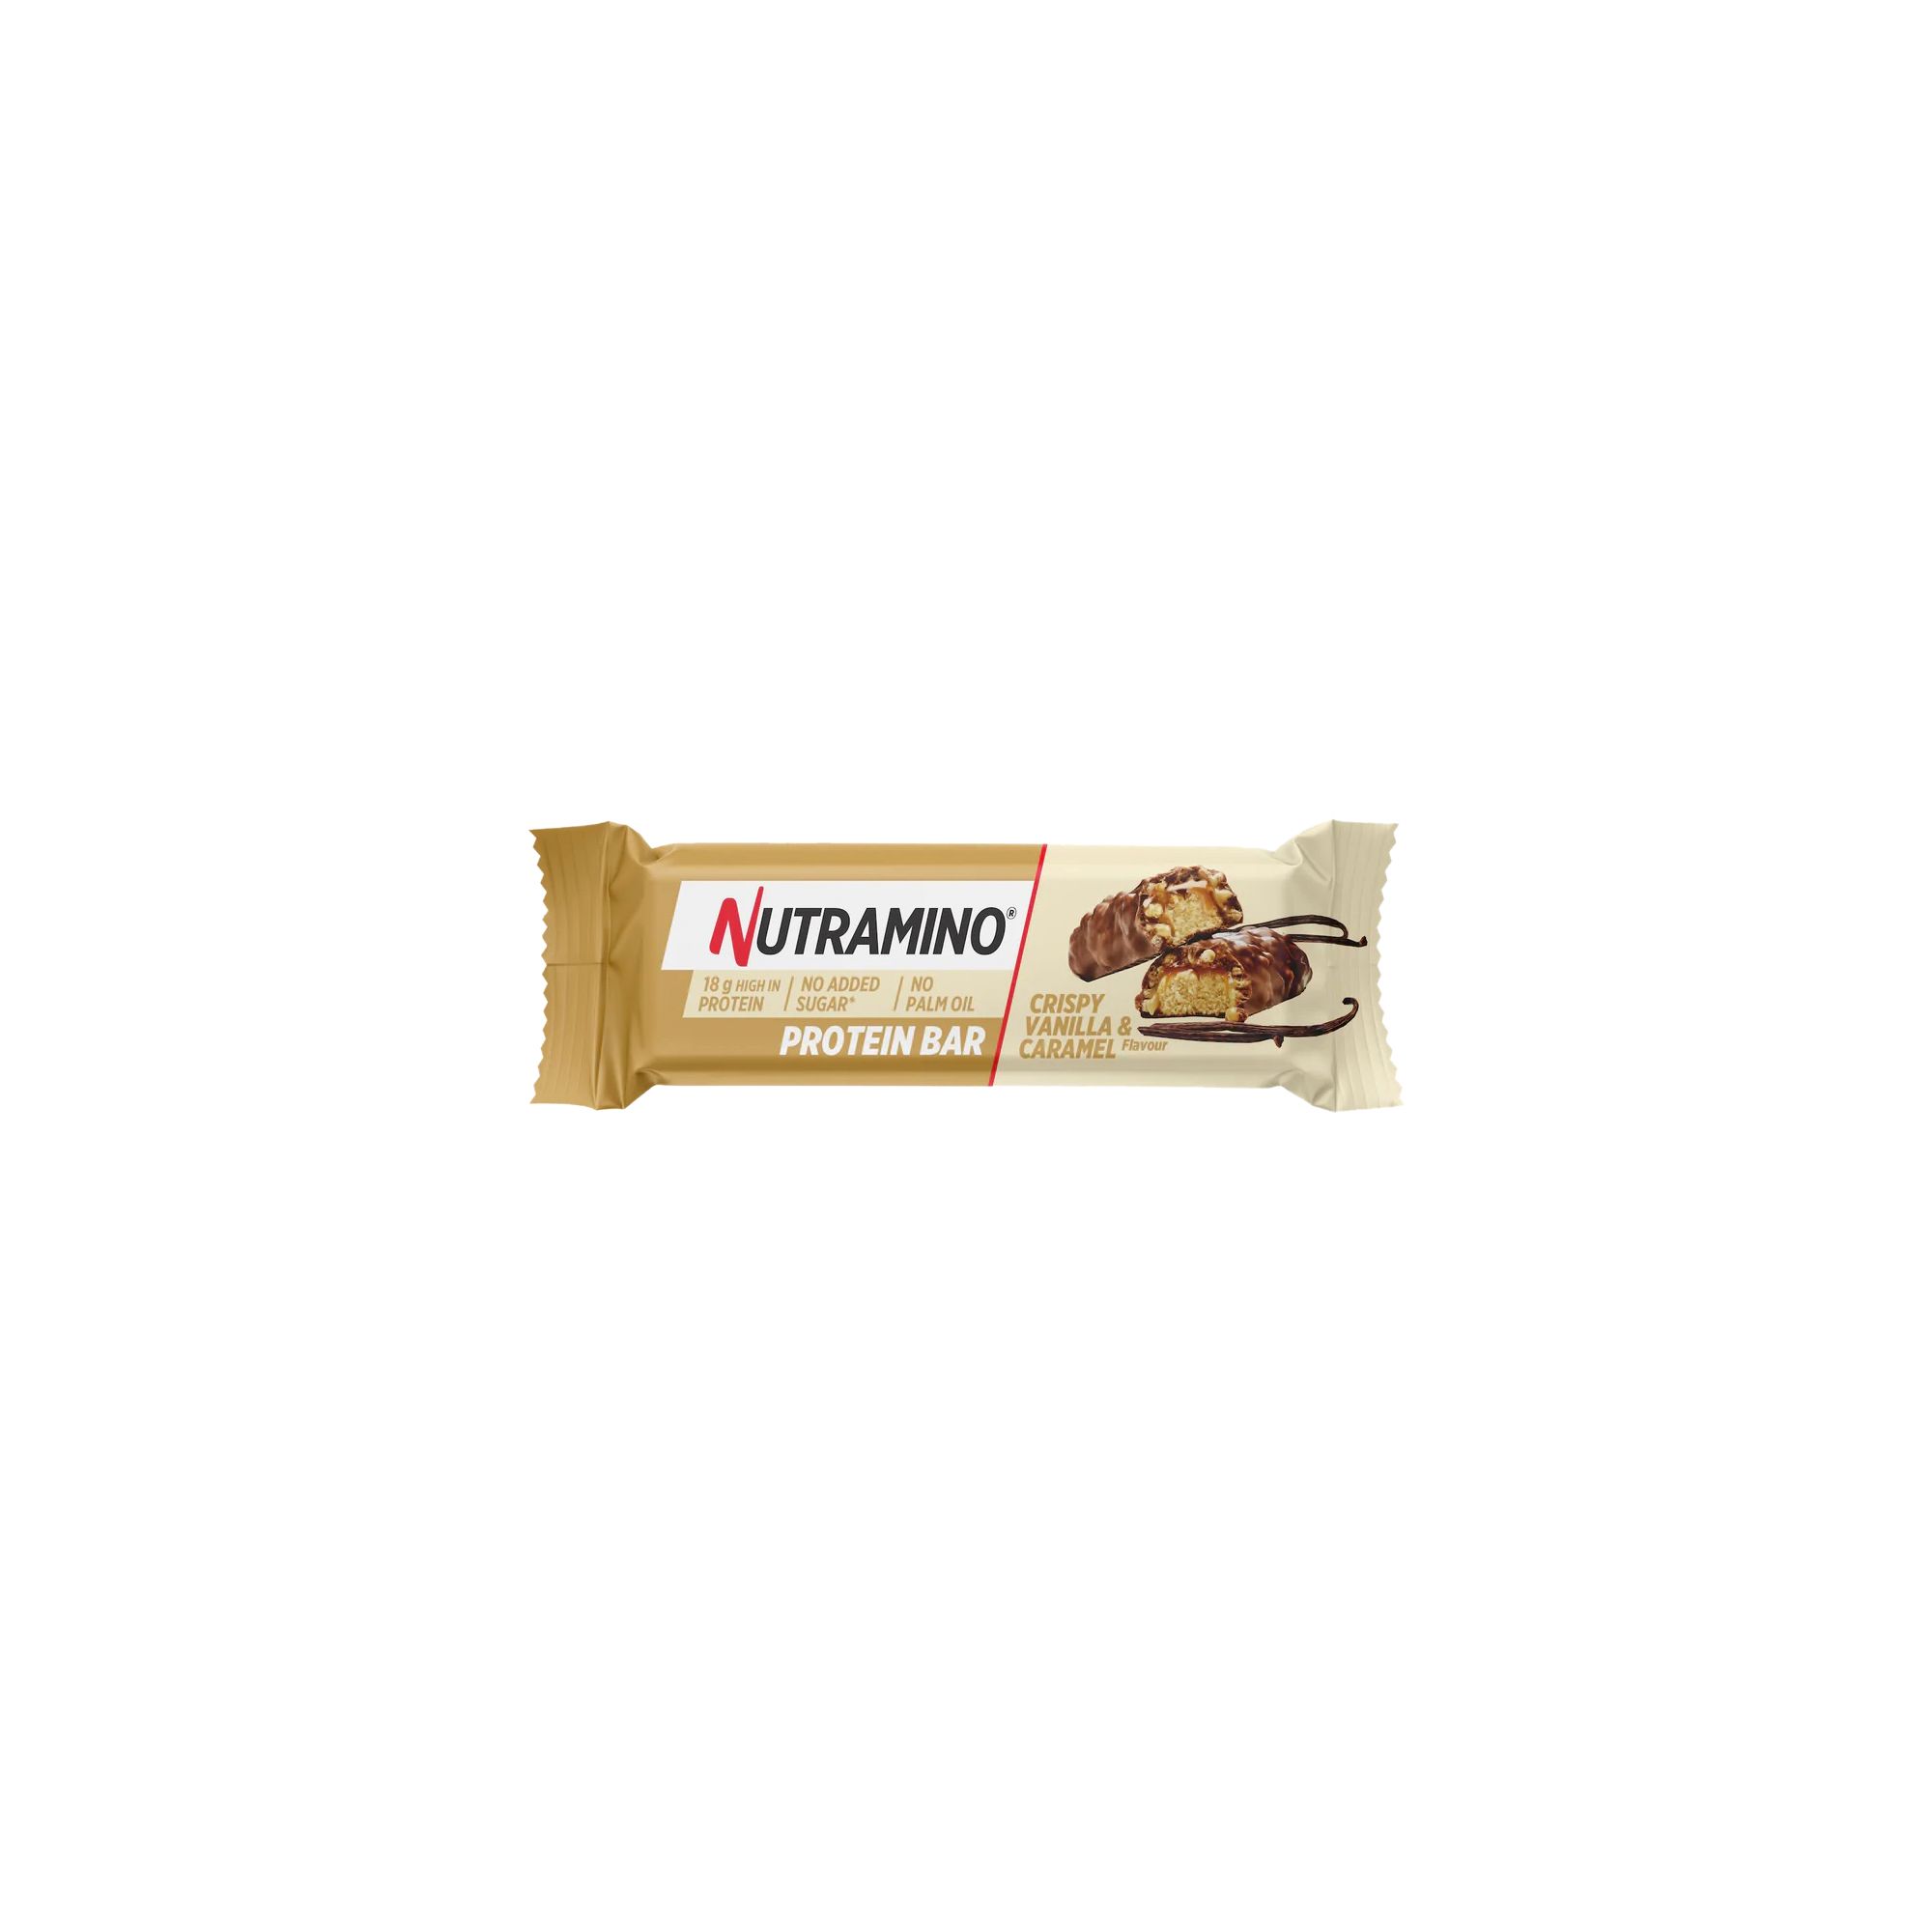 Bauturi & Energizante Nutramino Crispy Vanilla Caramel Nutramino La reduceri Bauturi